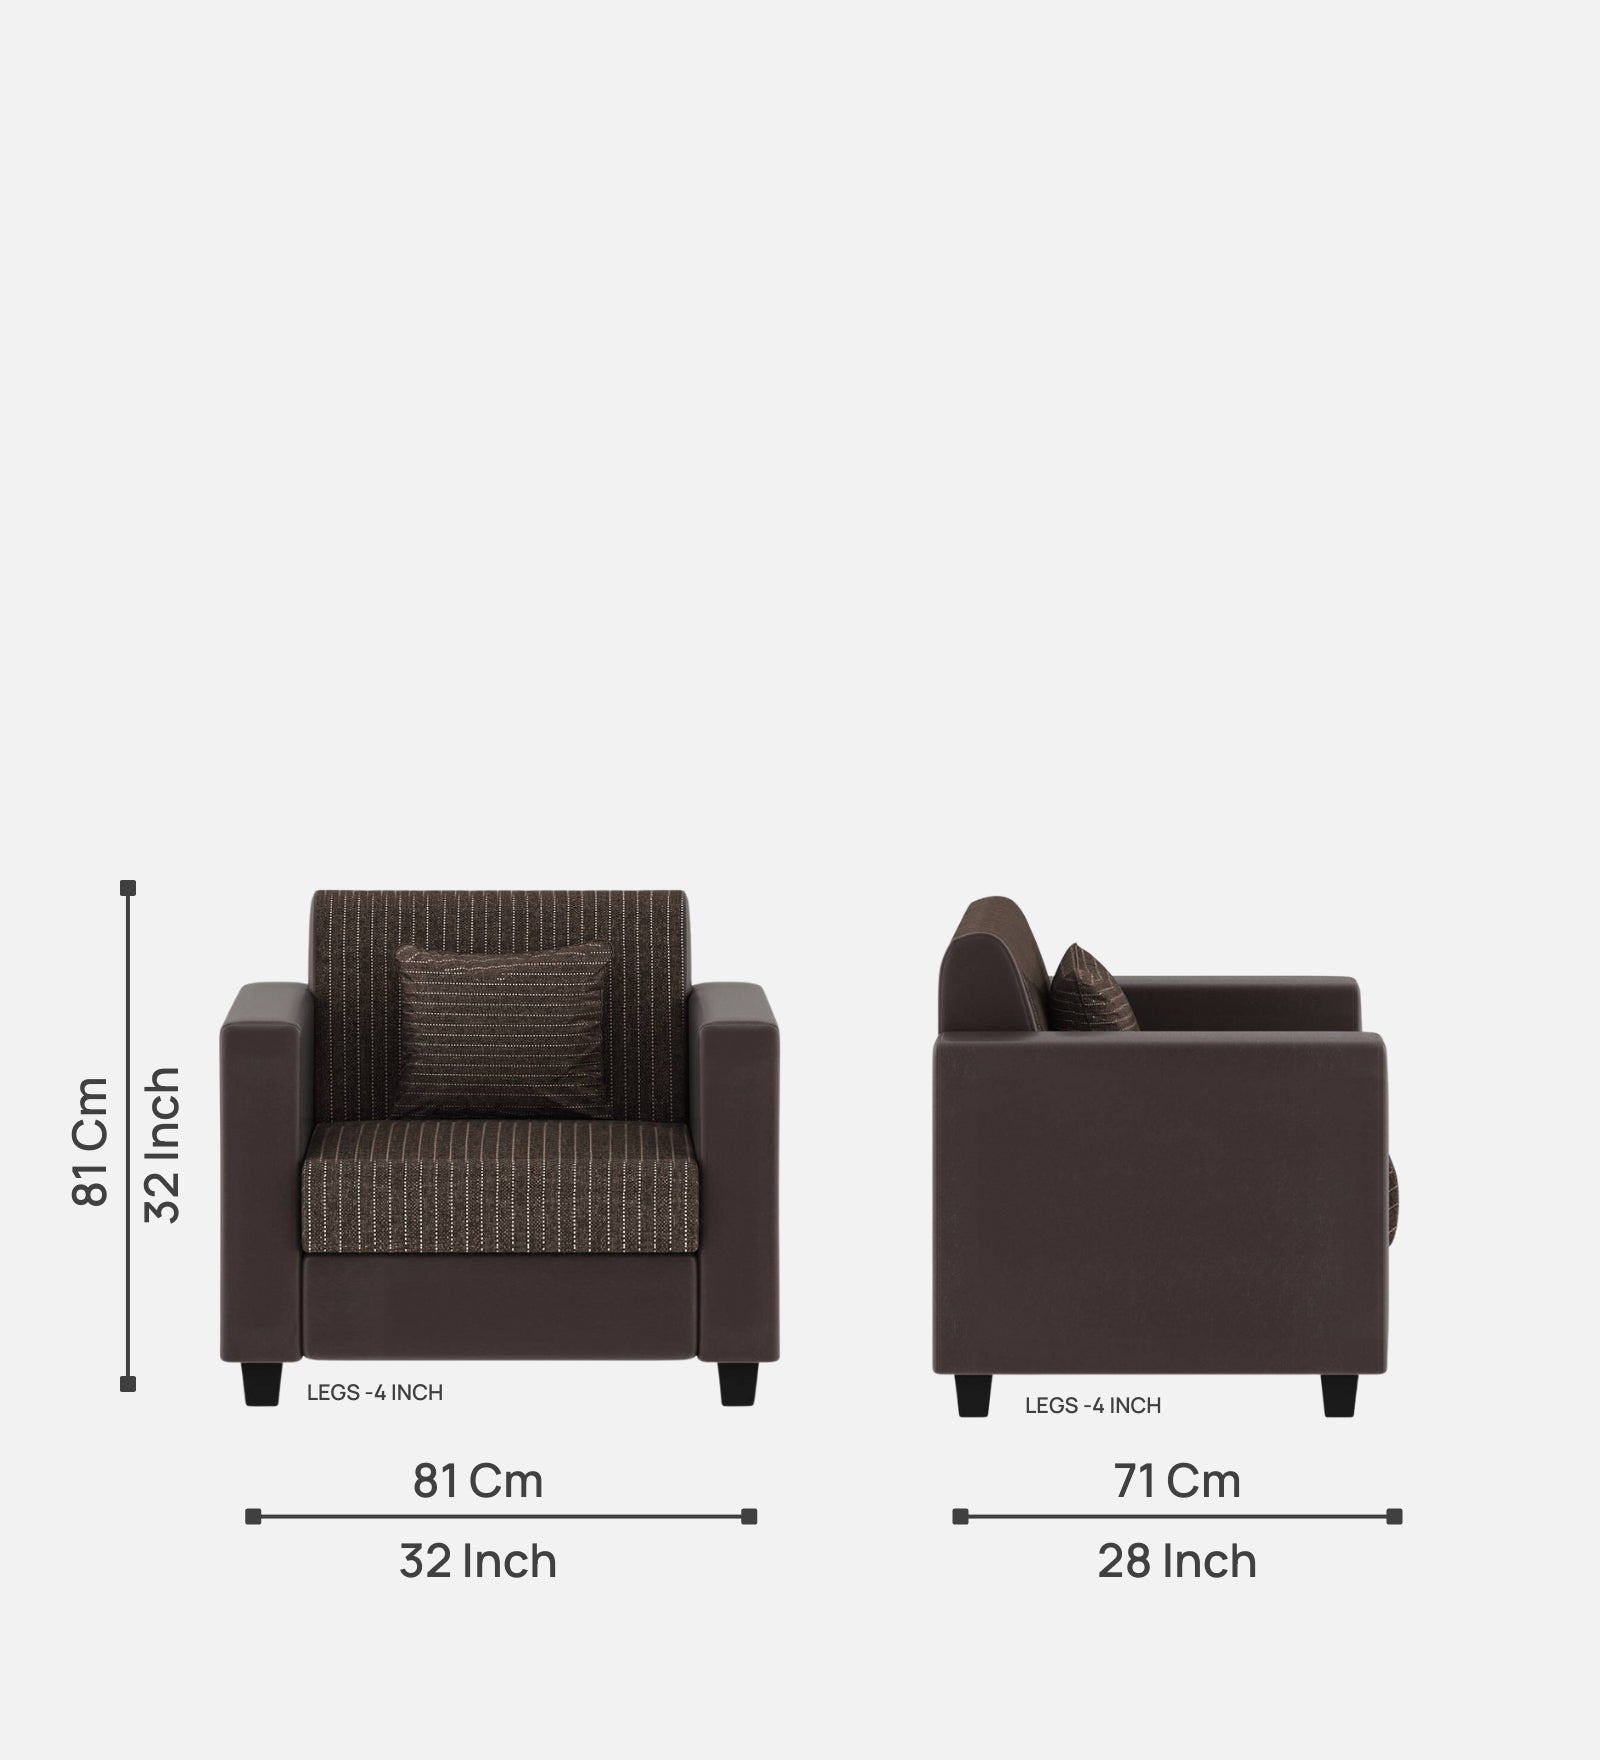 Baley Fabric 1 Seater Sofa in Lama Brown Colour